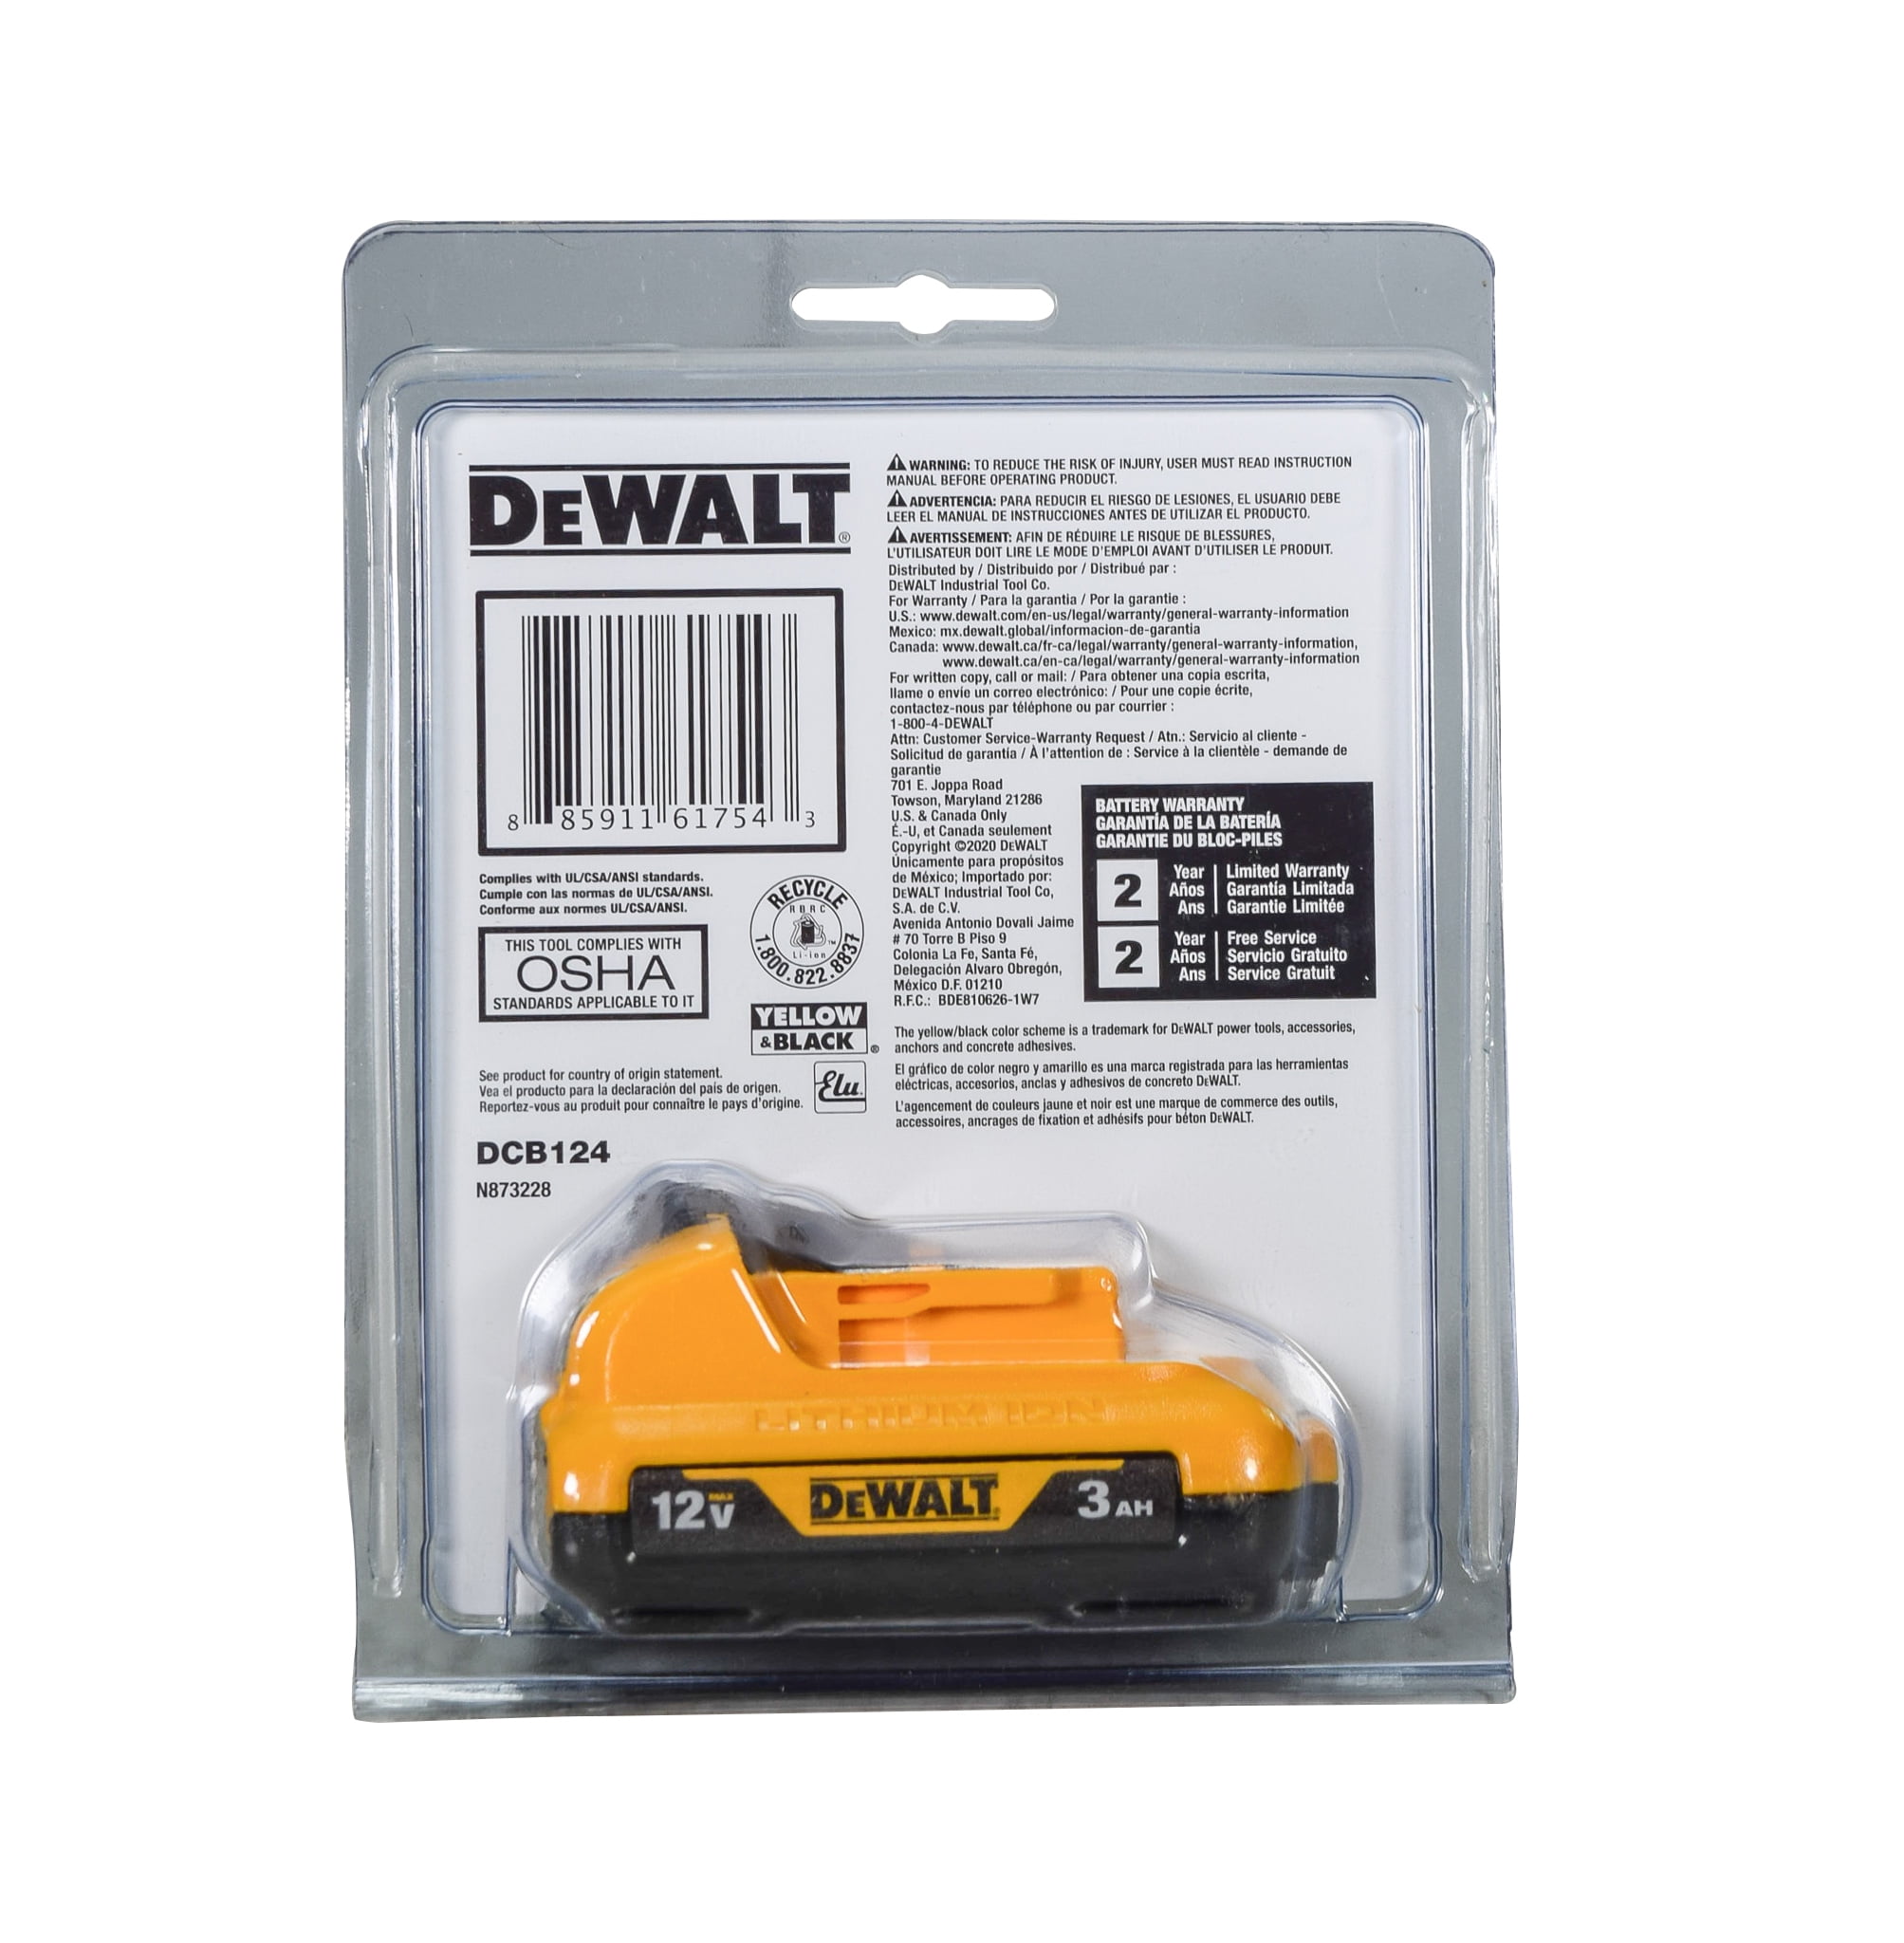 Dewalt-DCB124 12V MAX 3.0Ah Li-Ion Battery